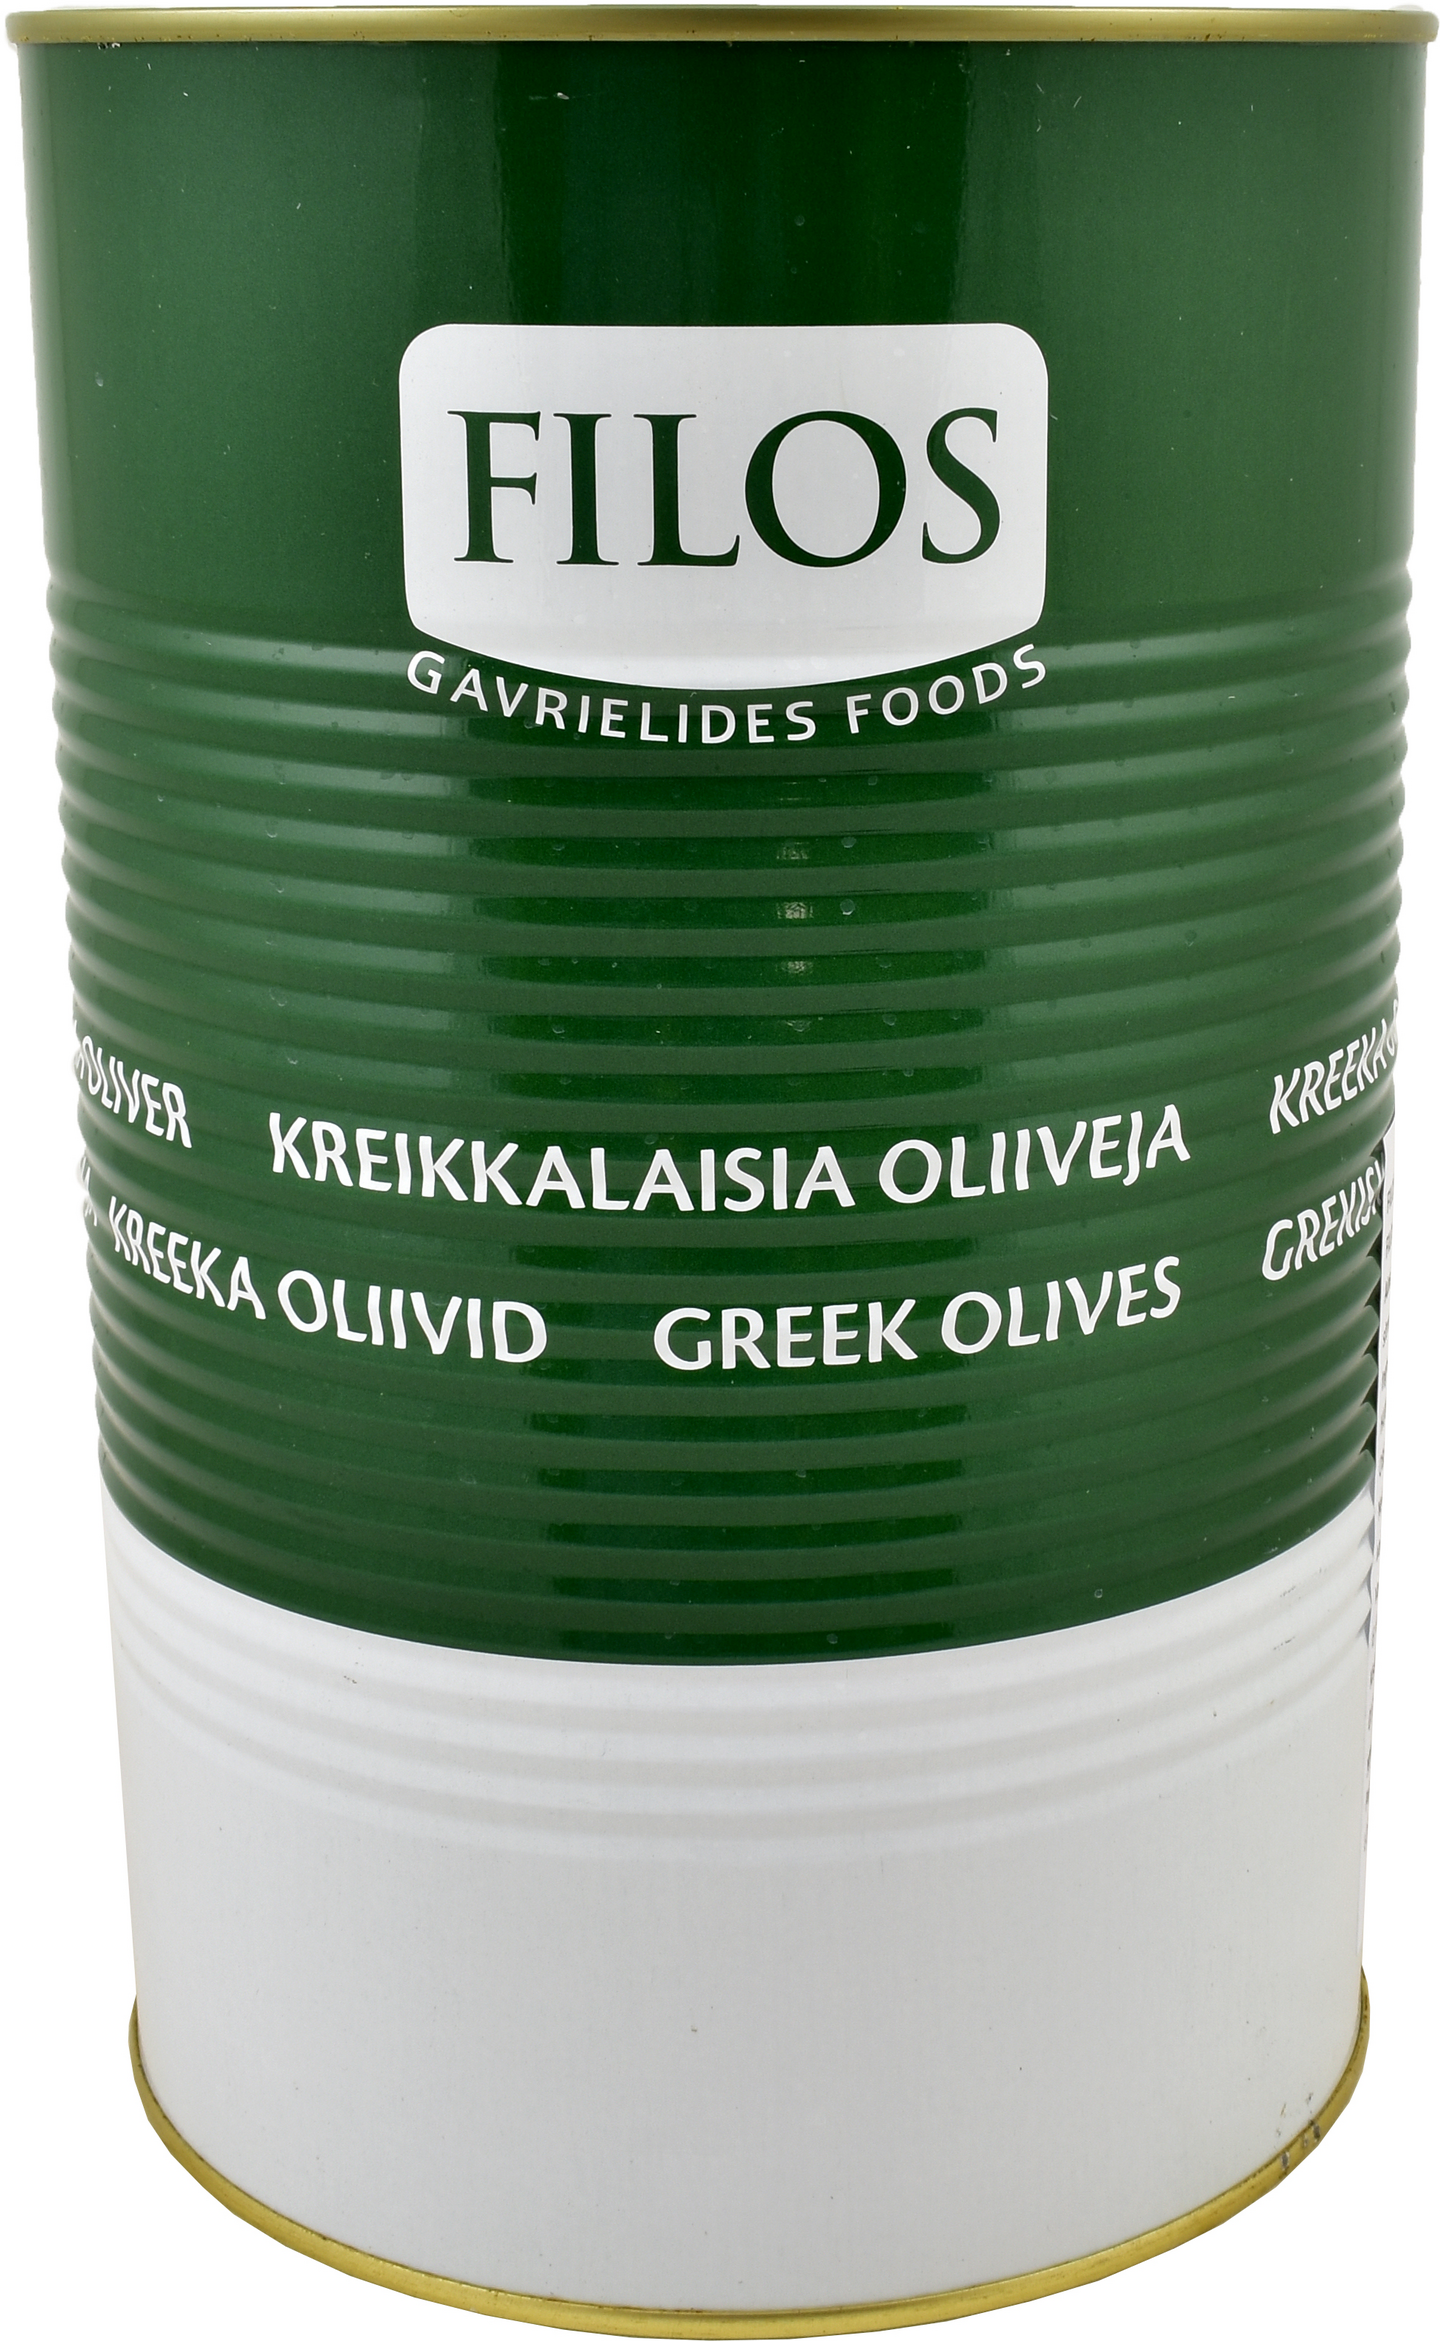 Filos vihreä oliivi kivetön 4,2/2kg mammouth